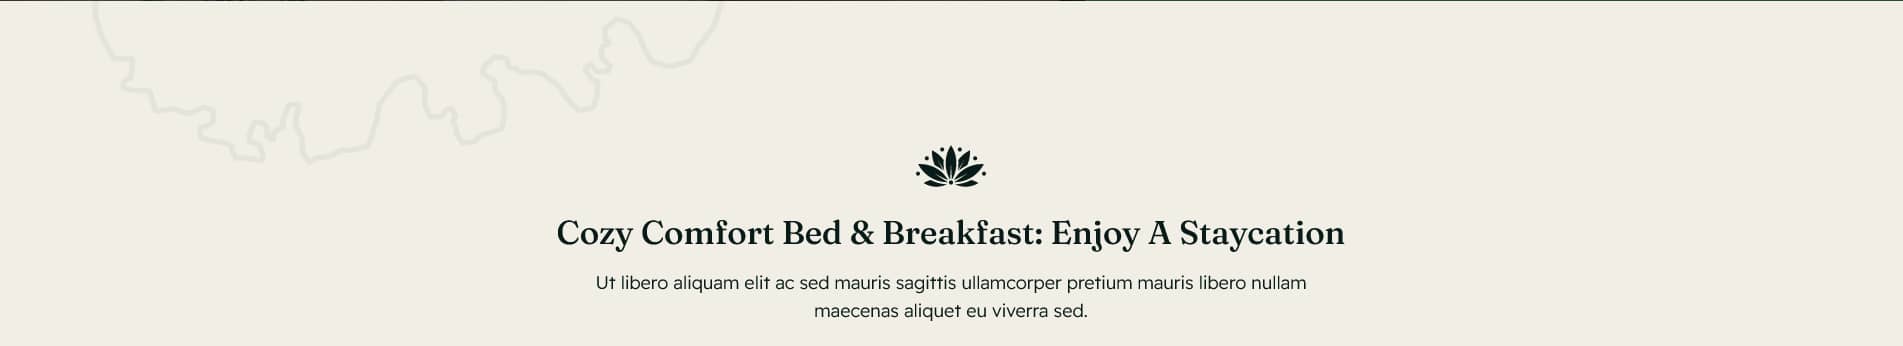 Avada Bed & Breakfast Info